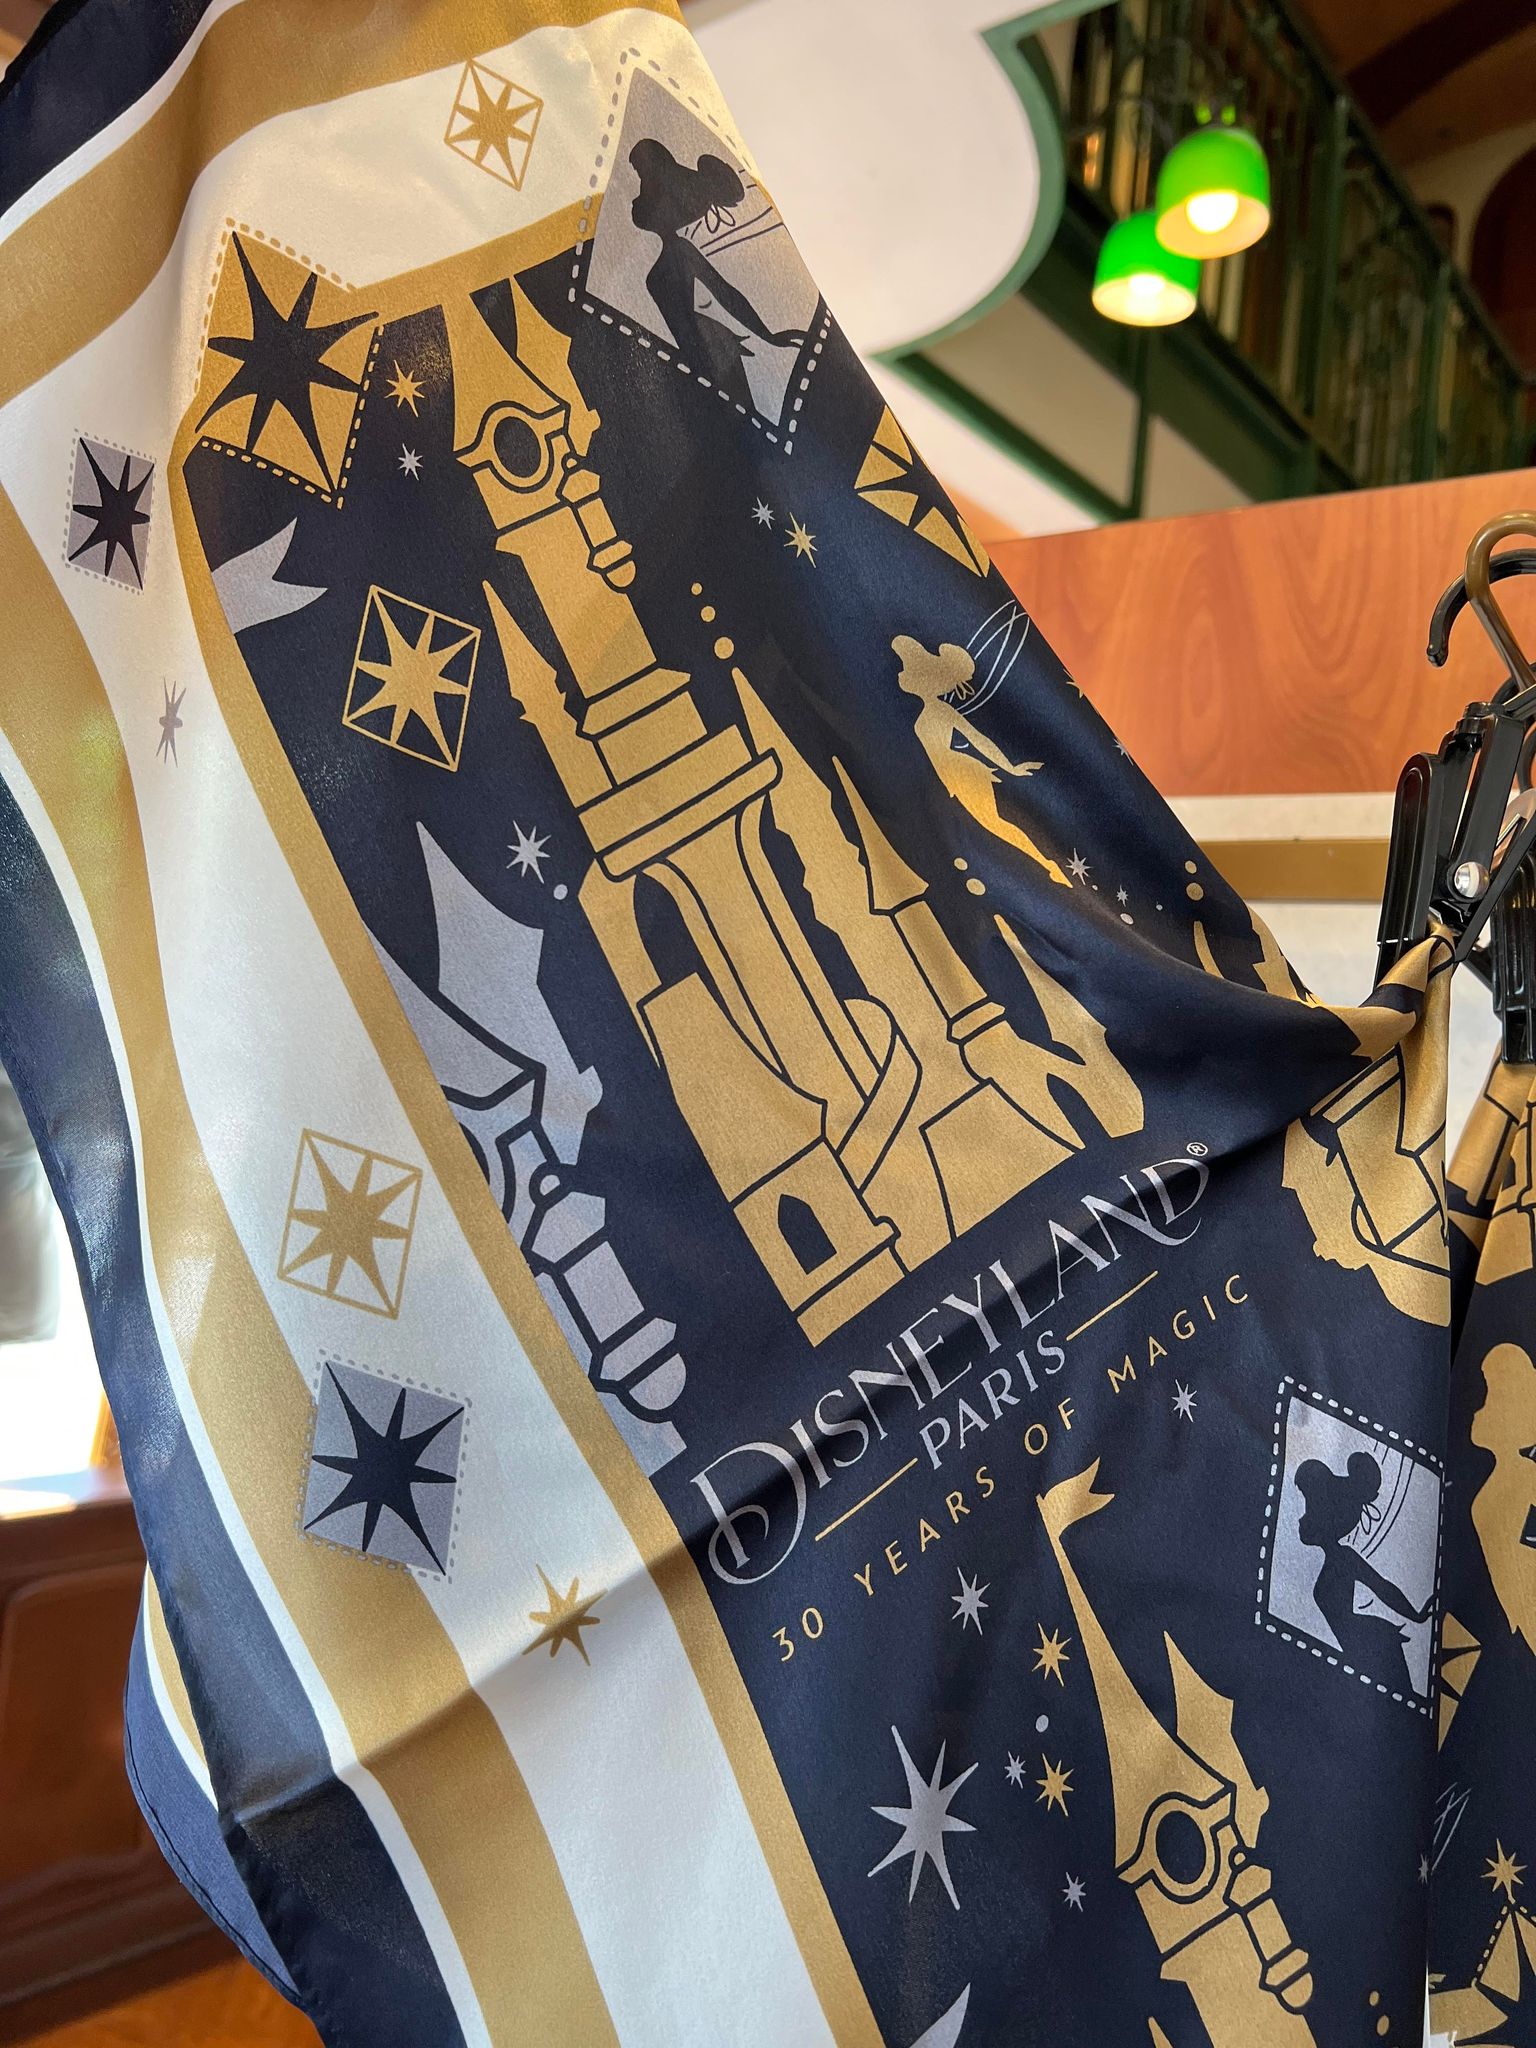 disneyland paris anniversary scarf